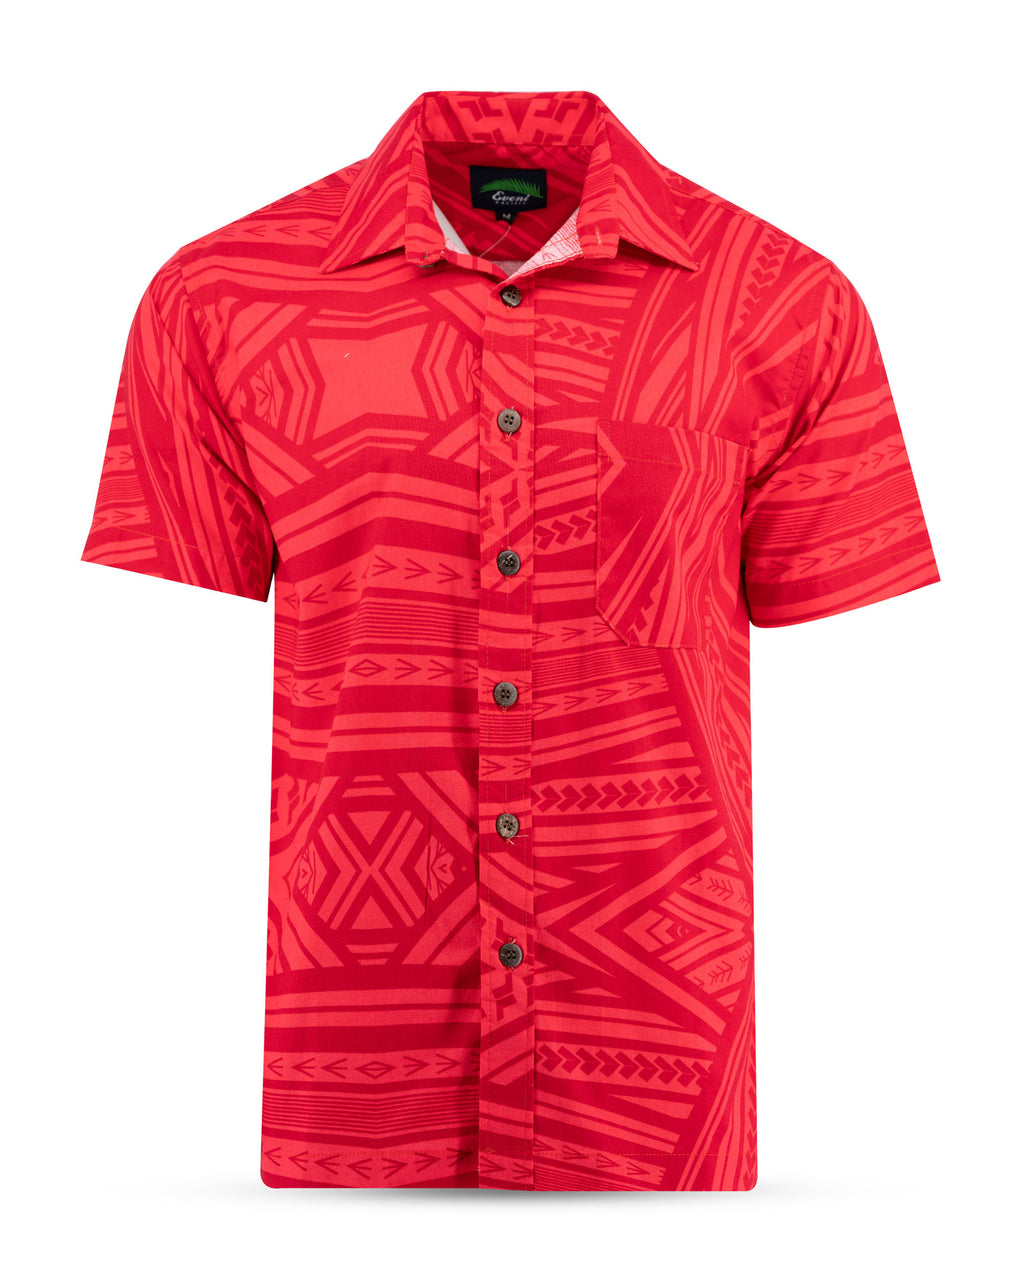 Eveni Pacific Men's Classic Shirt - Renegade Red